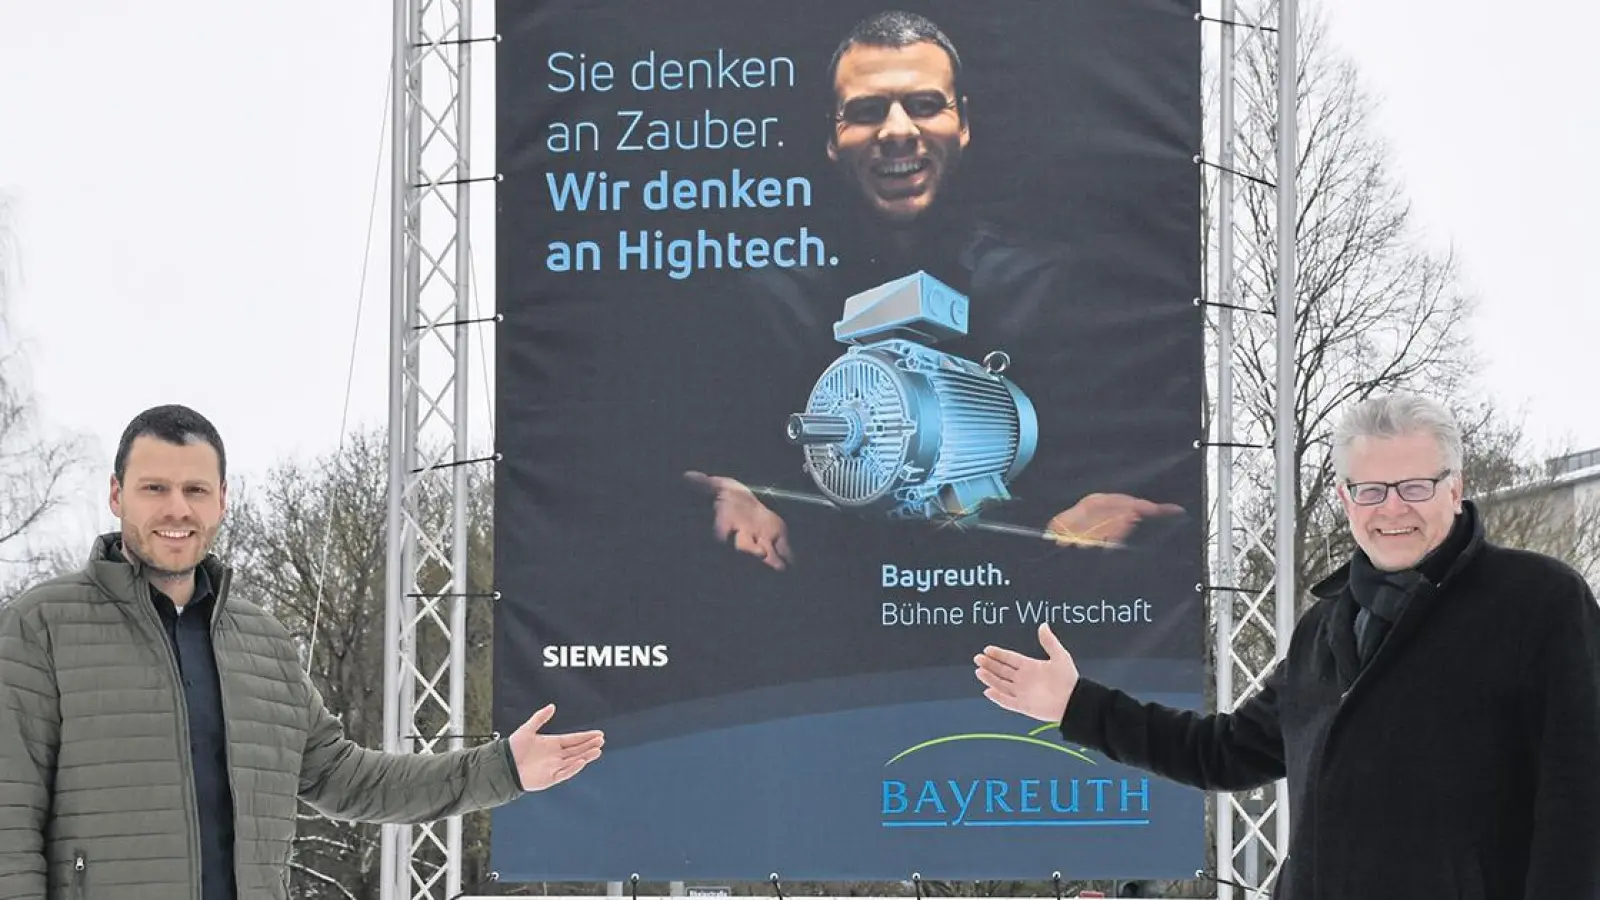 Lokalnachrichten Bayreuth: Hightech statt Zauberei (Foto: red)